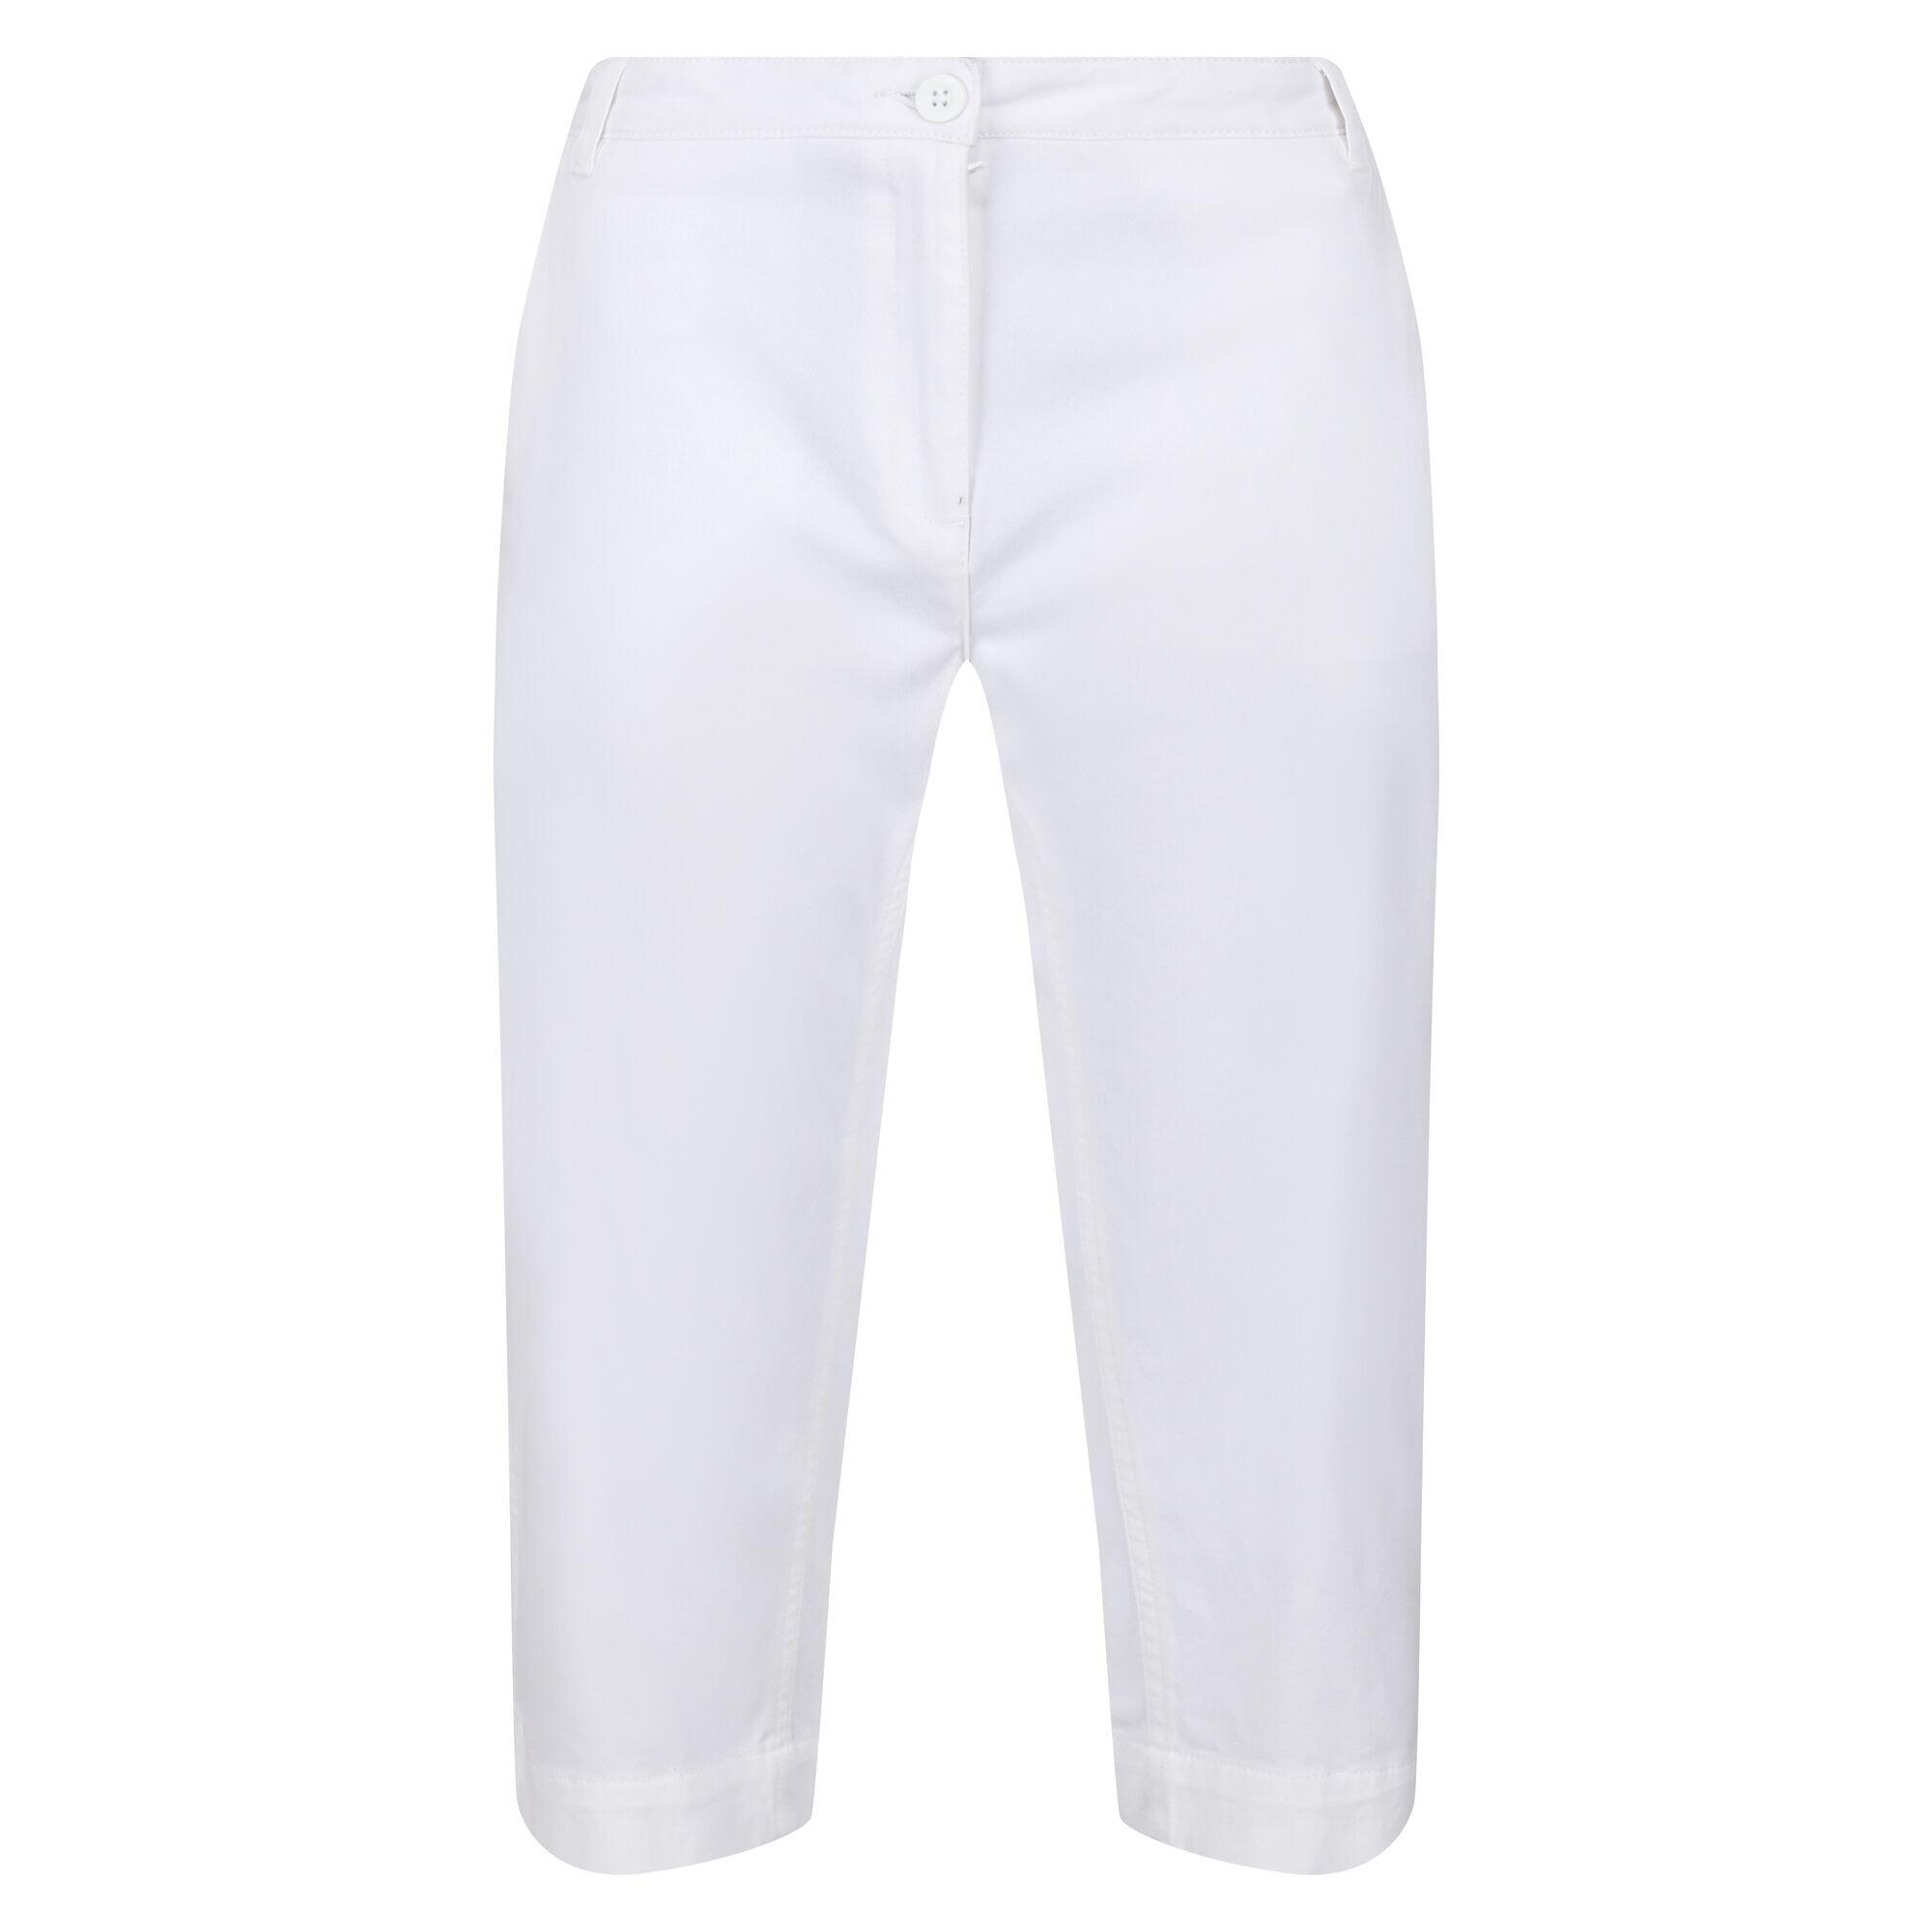 REGATTA Womens/Ladies Bayla Cropped Trousers (White)